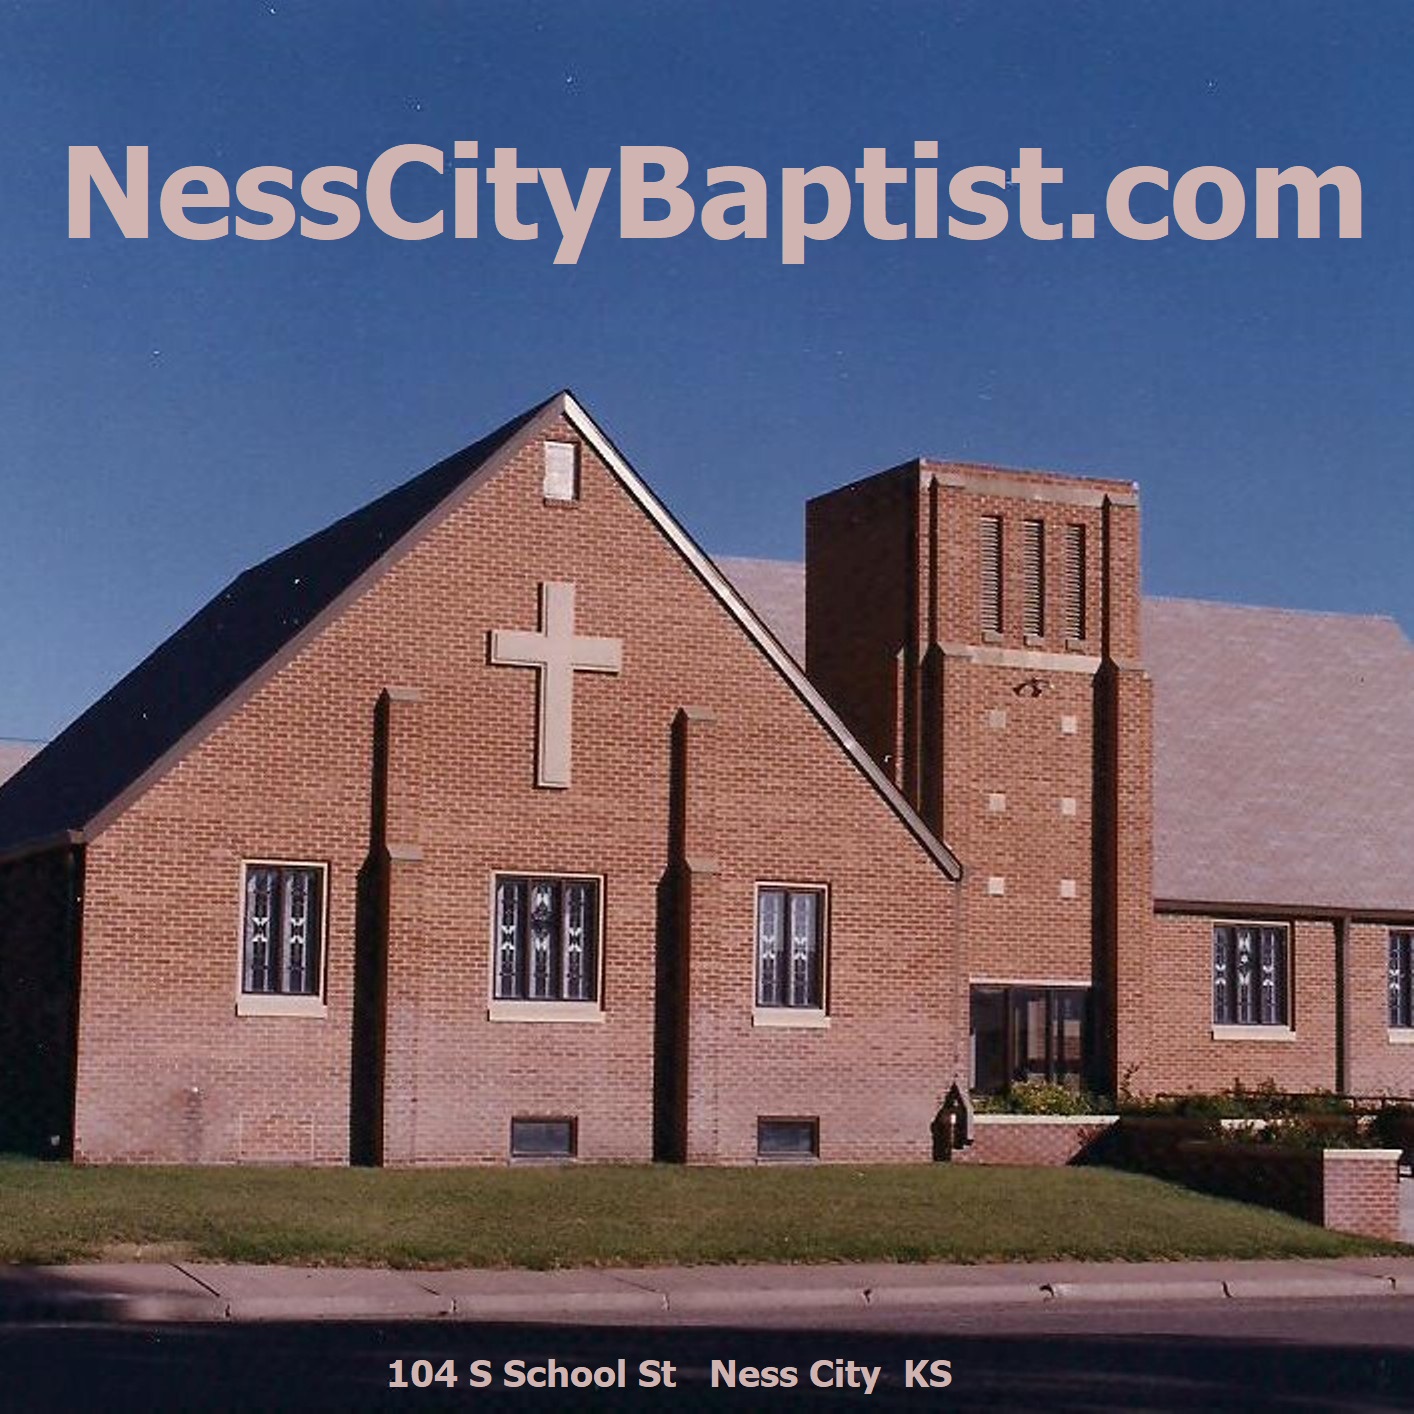 Ness City Baptist